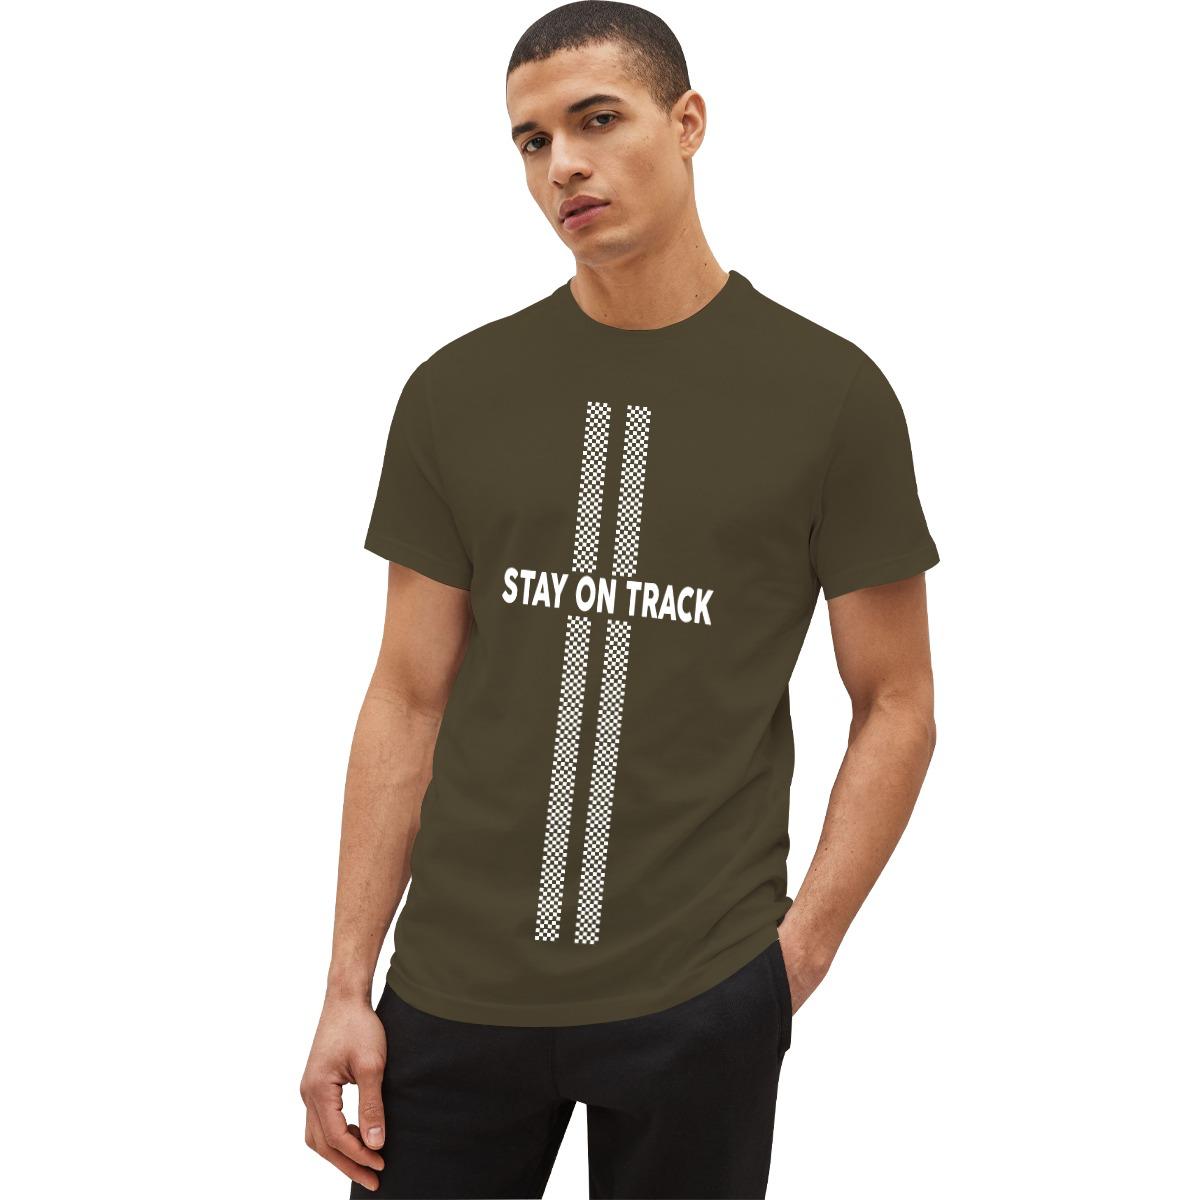 HG "STAY ON TRACK" Printed Tee Shirt - Woodrush